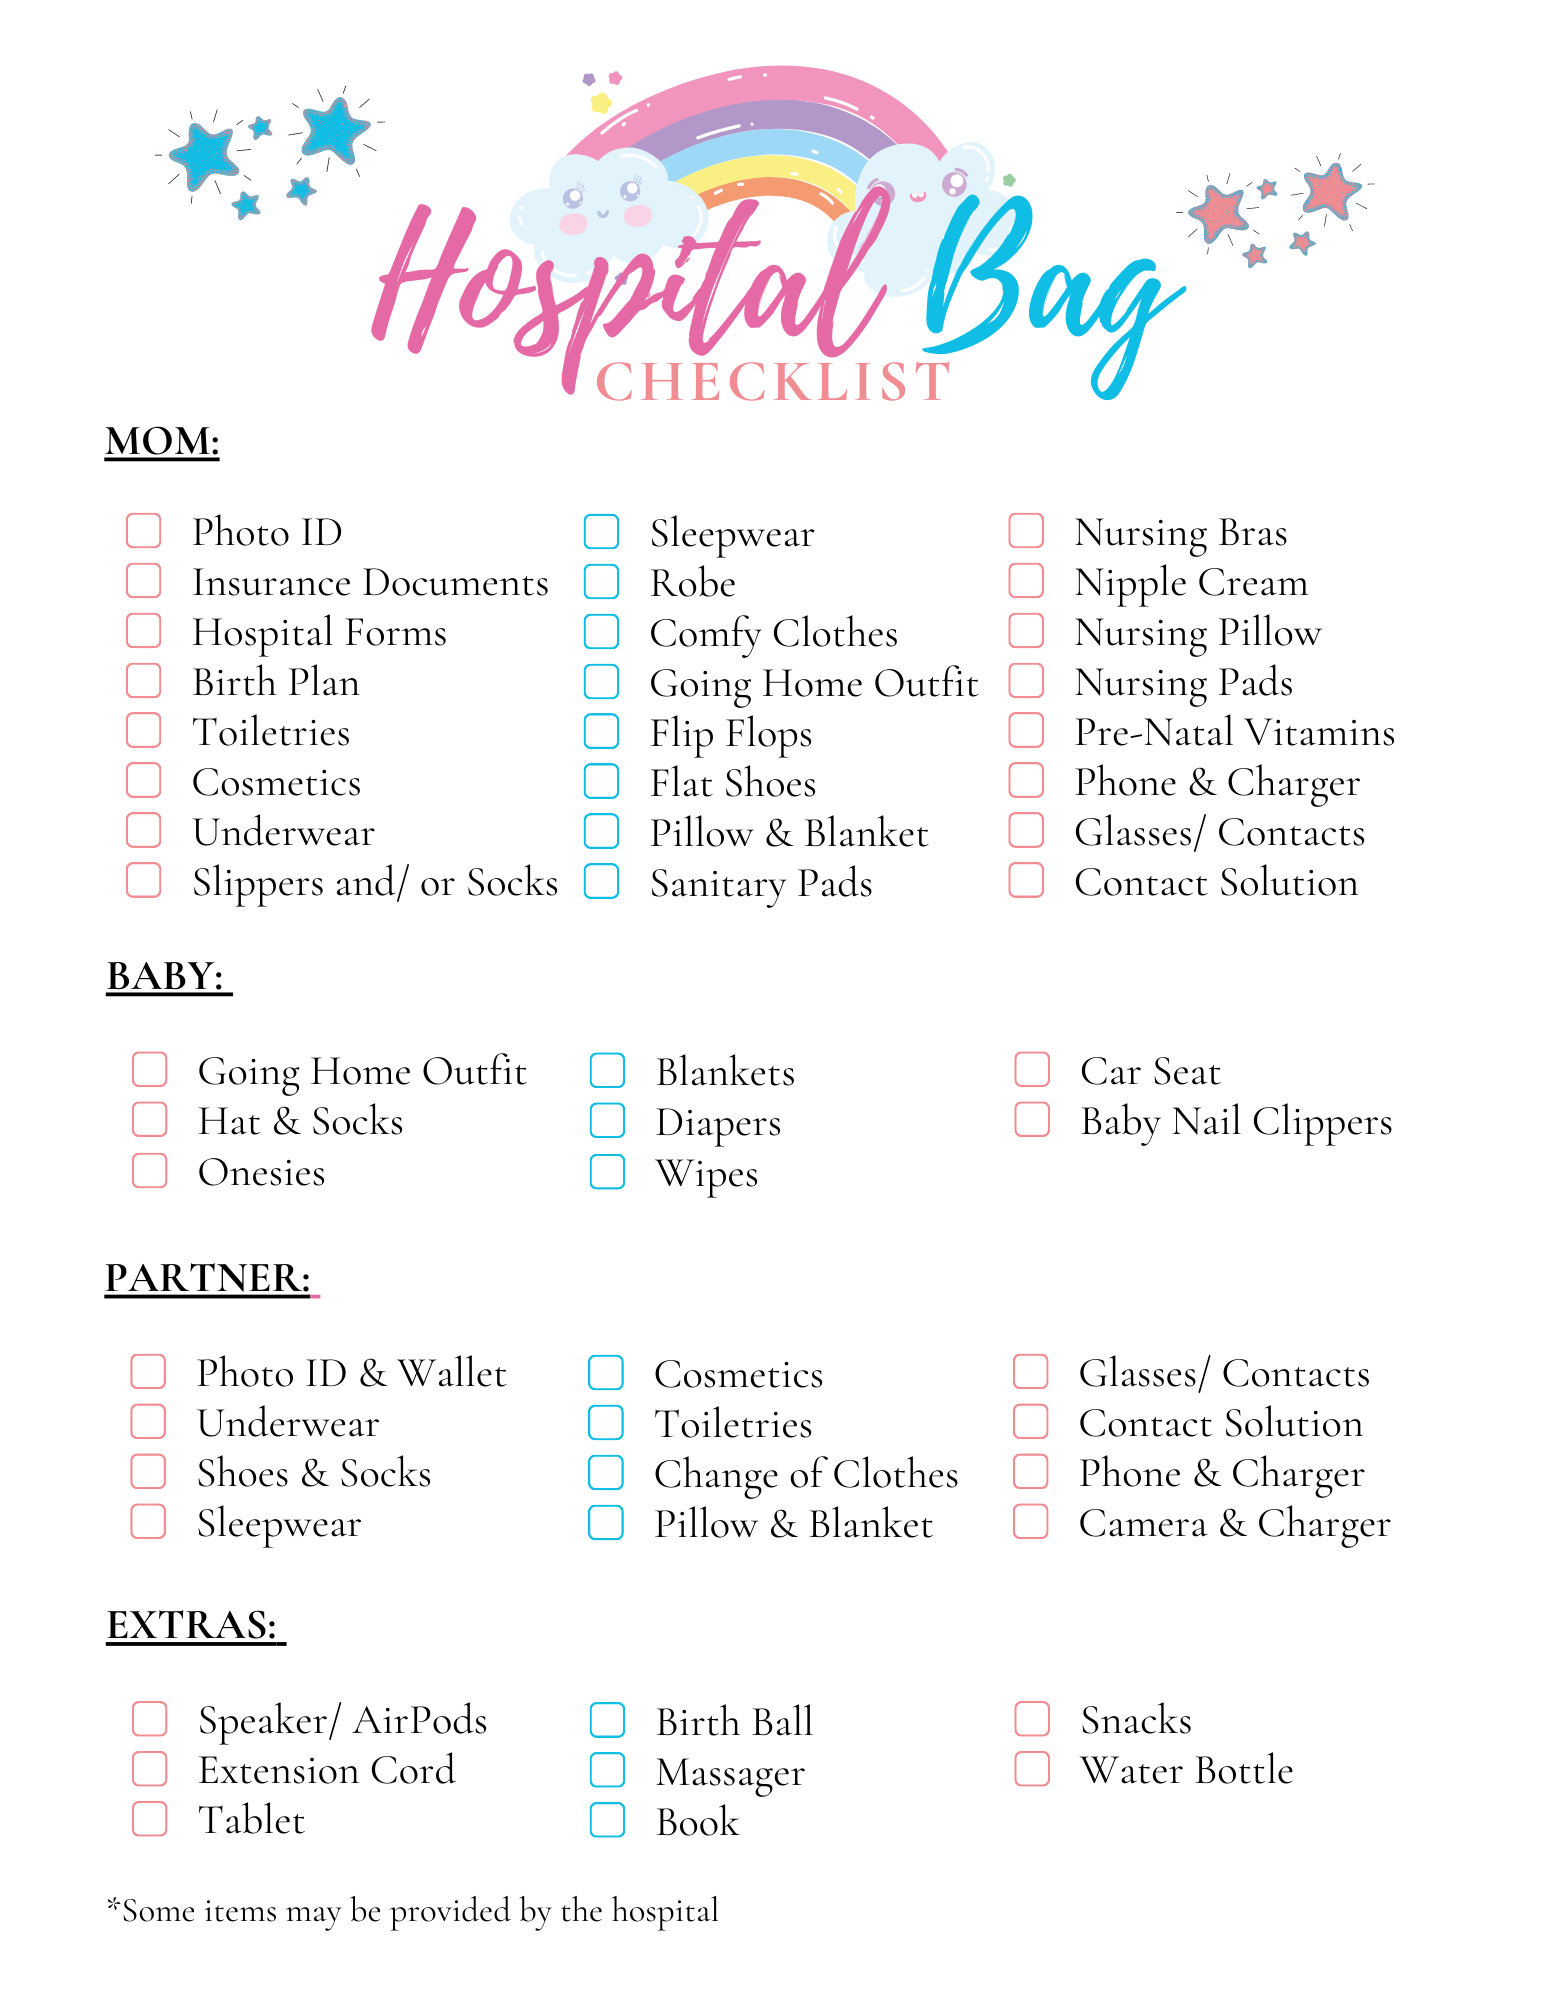 C Section Hospital Bag Checklist by @kristenmartin - Listium